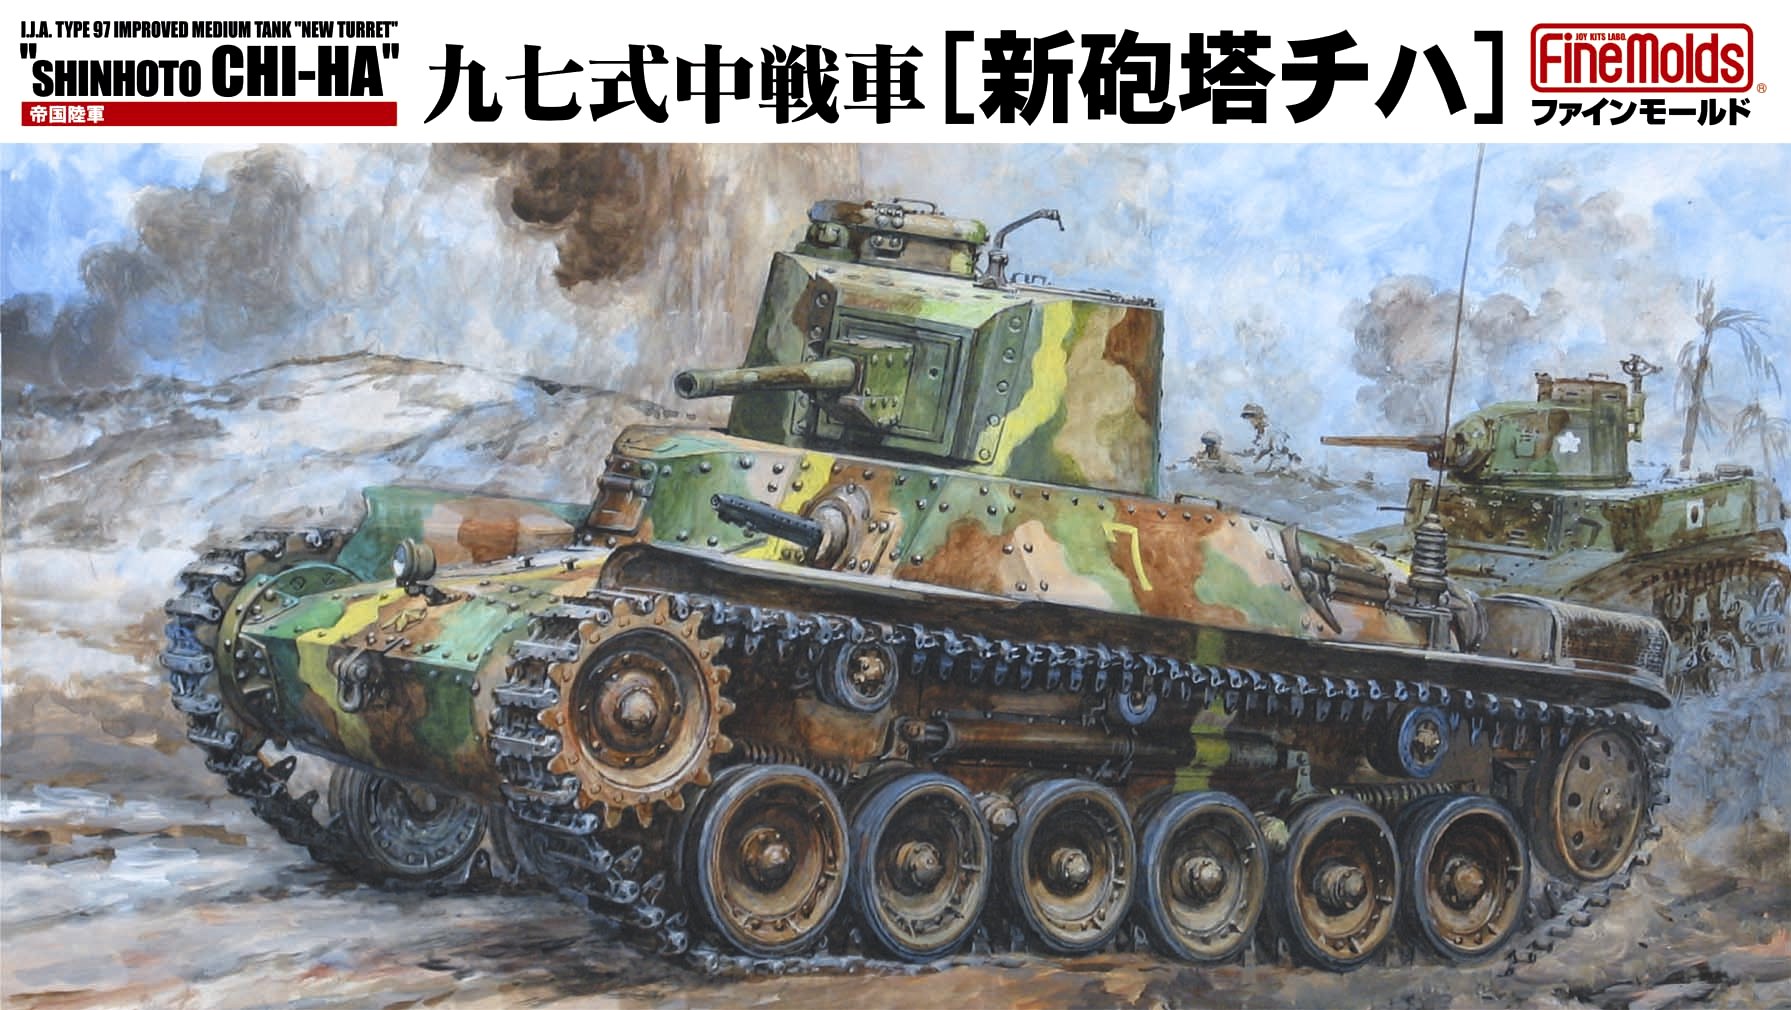 TKO2063 タコム 1/35 AMX-13 チャ-フィー砲塔 フランス軍 軽戦車